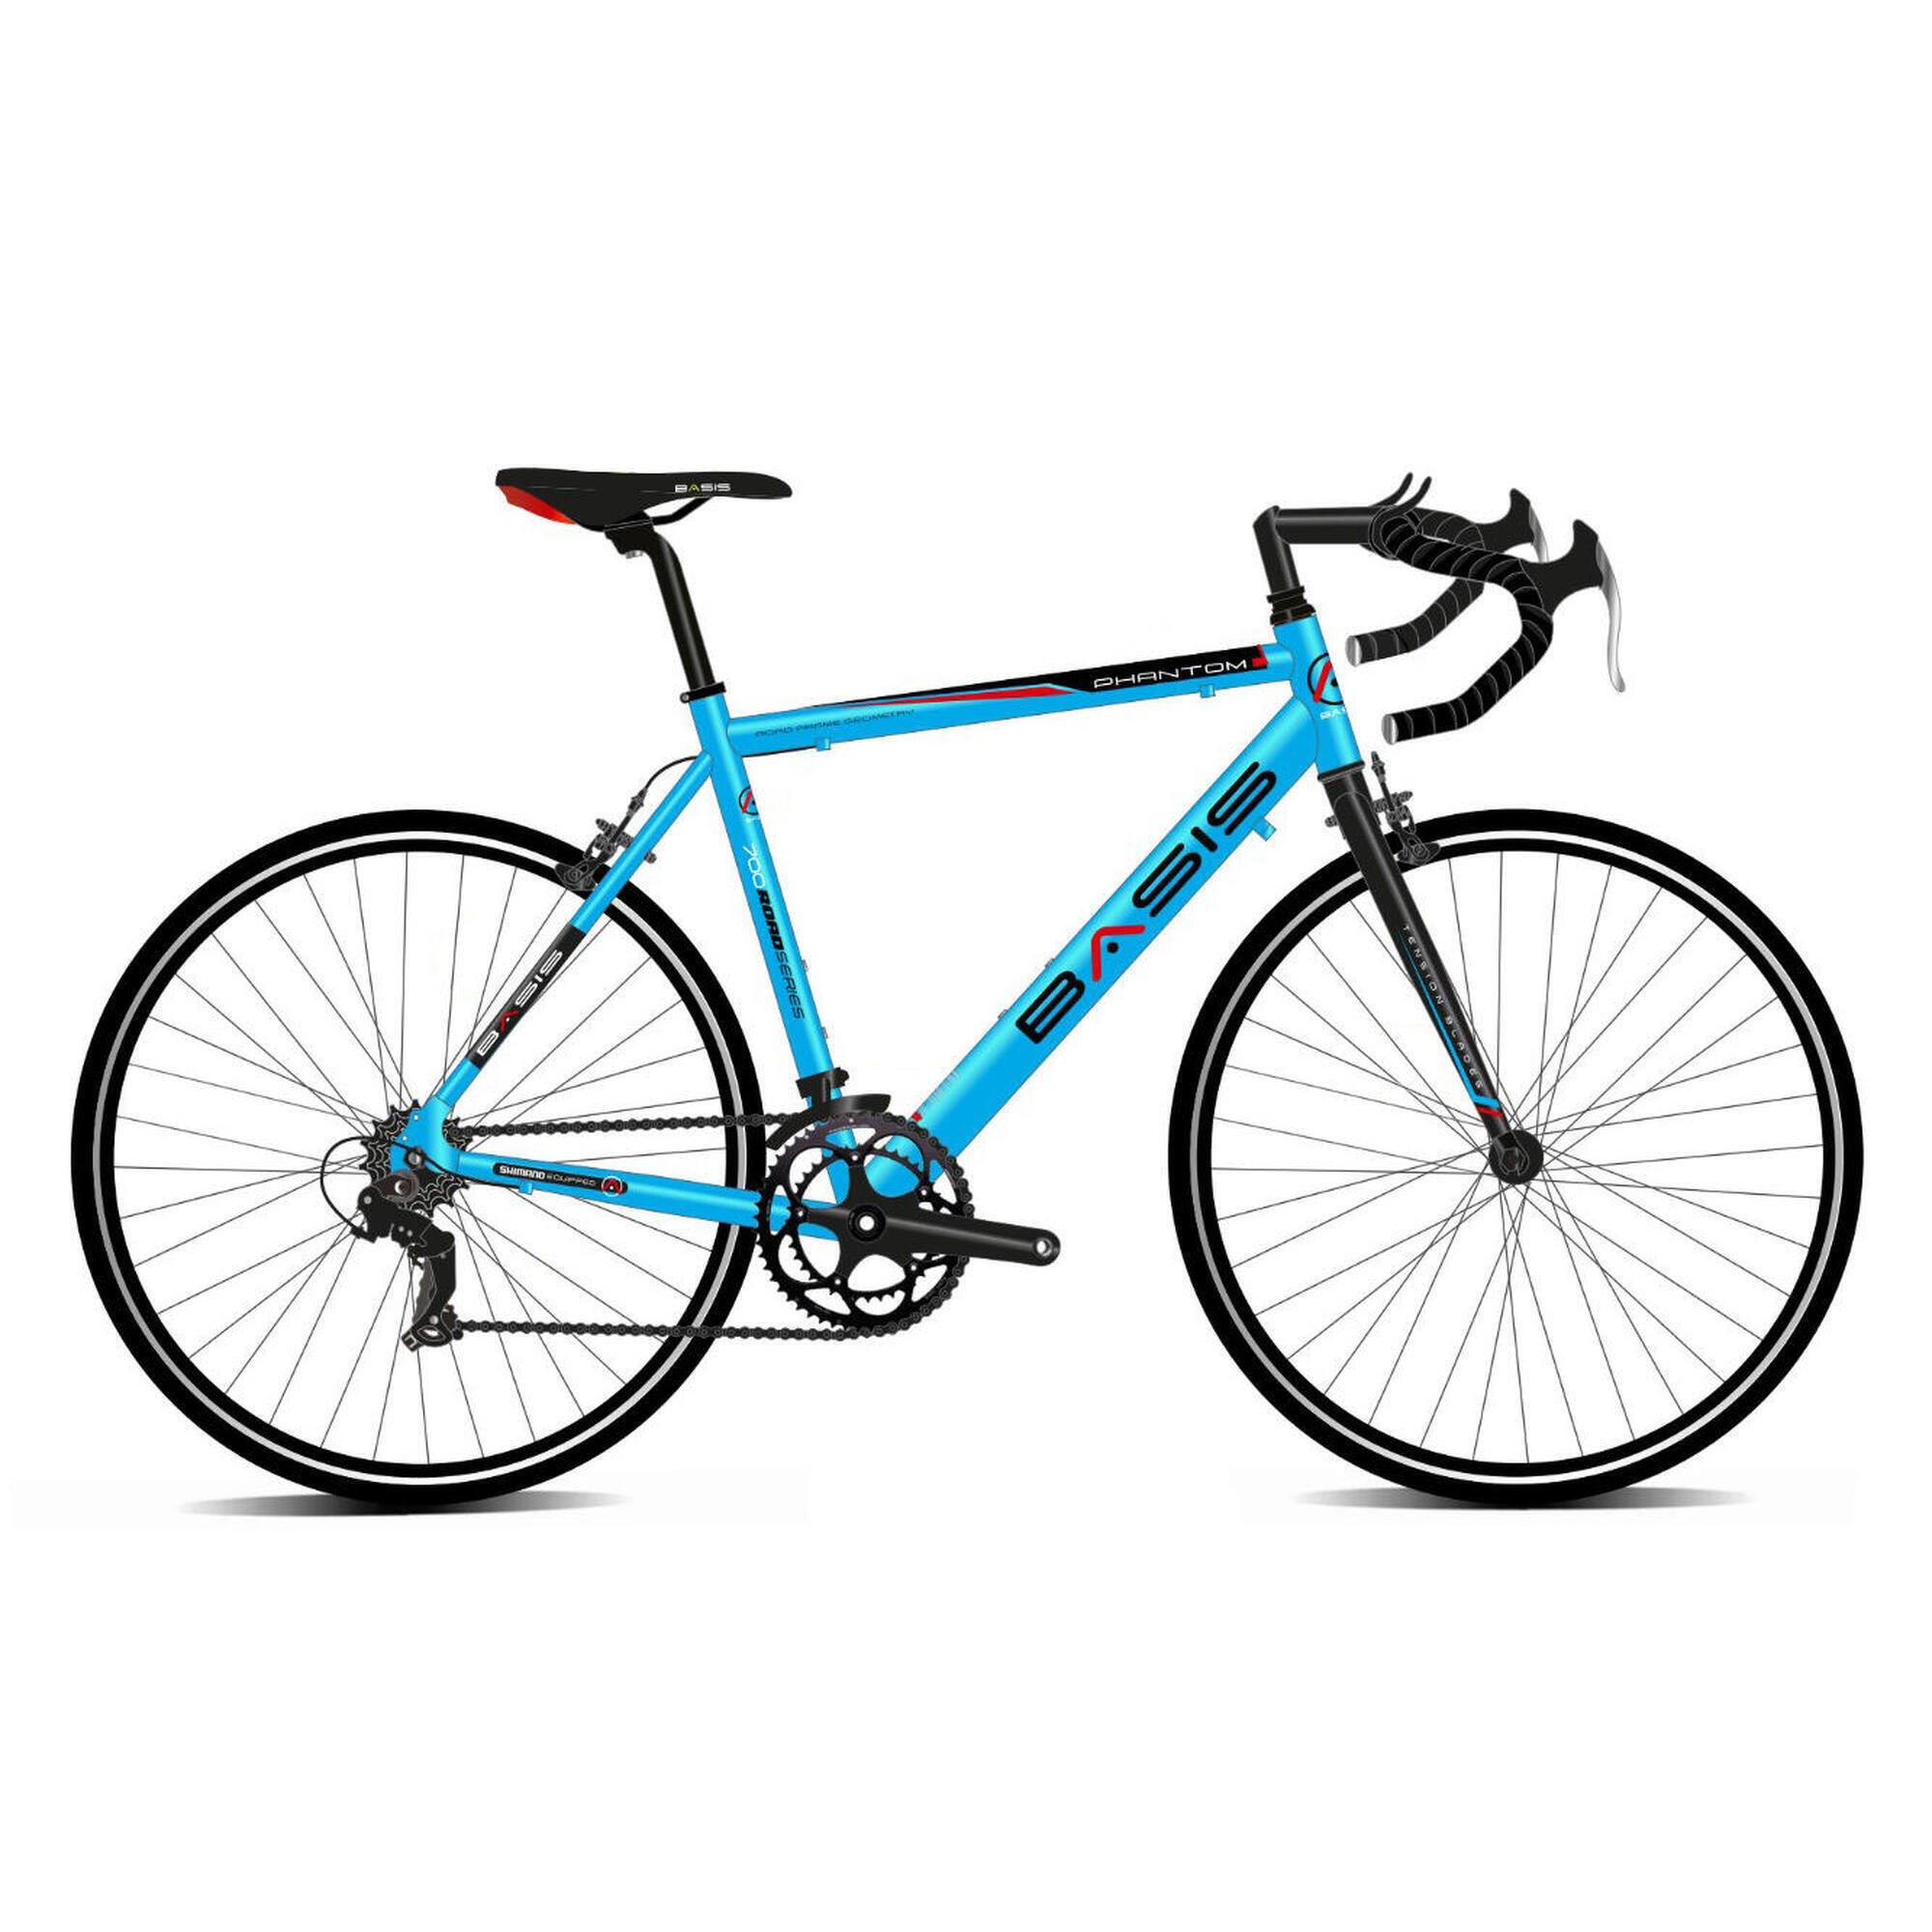 Basis Phantom Unisex Road Bike, 700c Wheel - Gloss Blue/Black 1/1